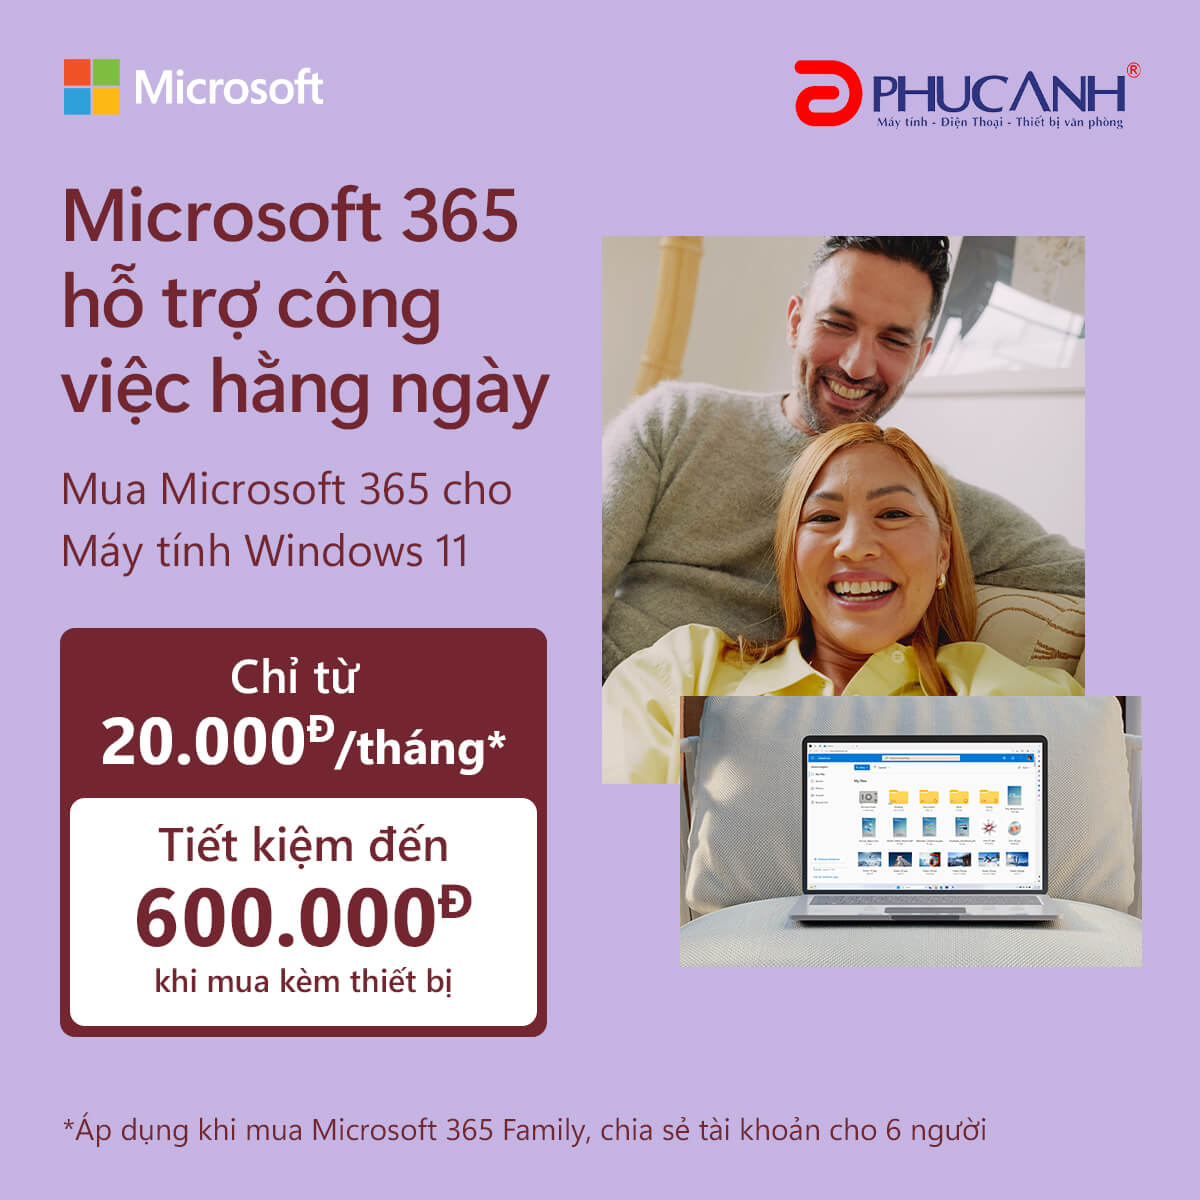 Microsoft 365 Copilot